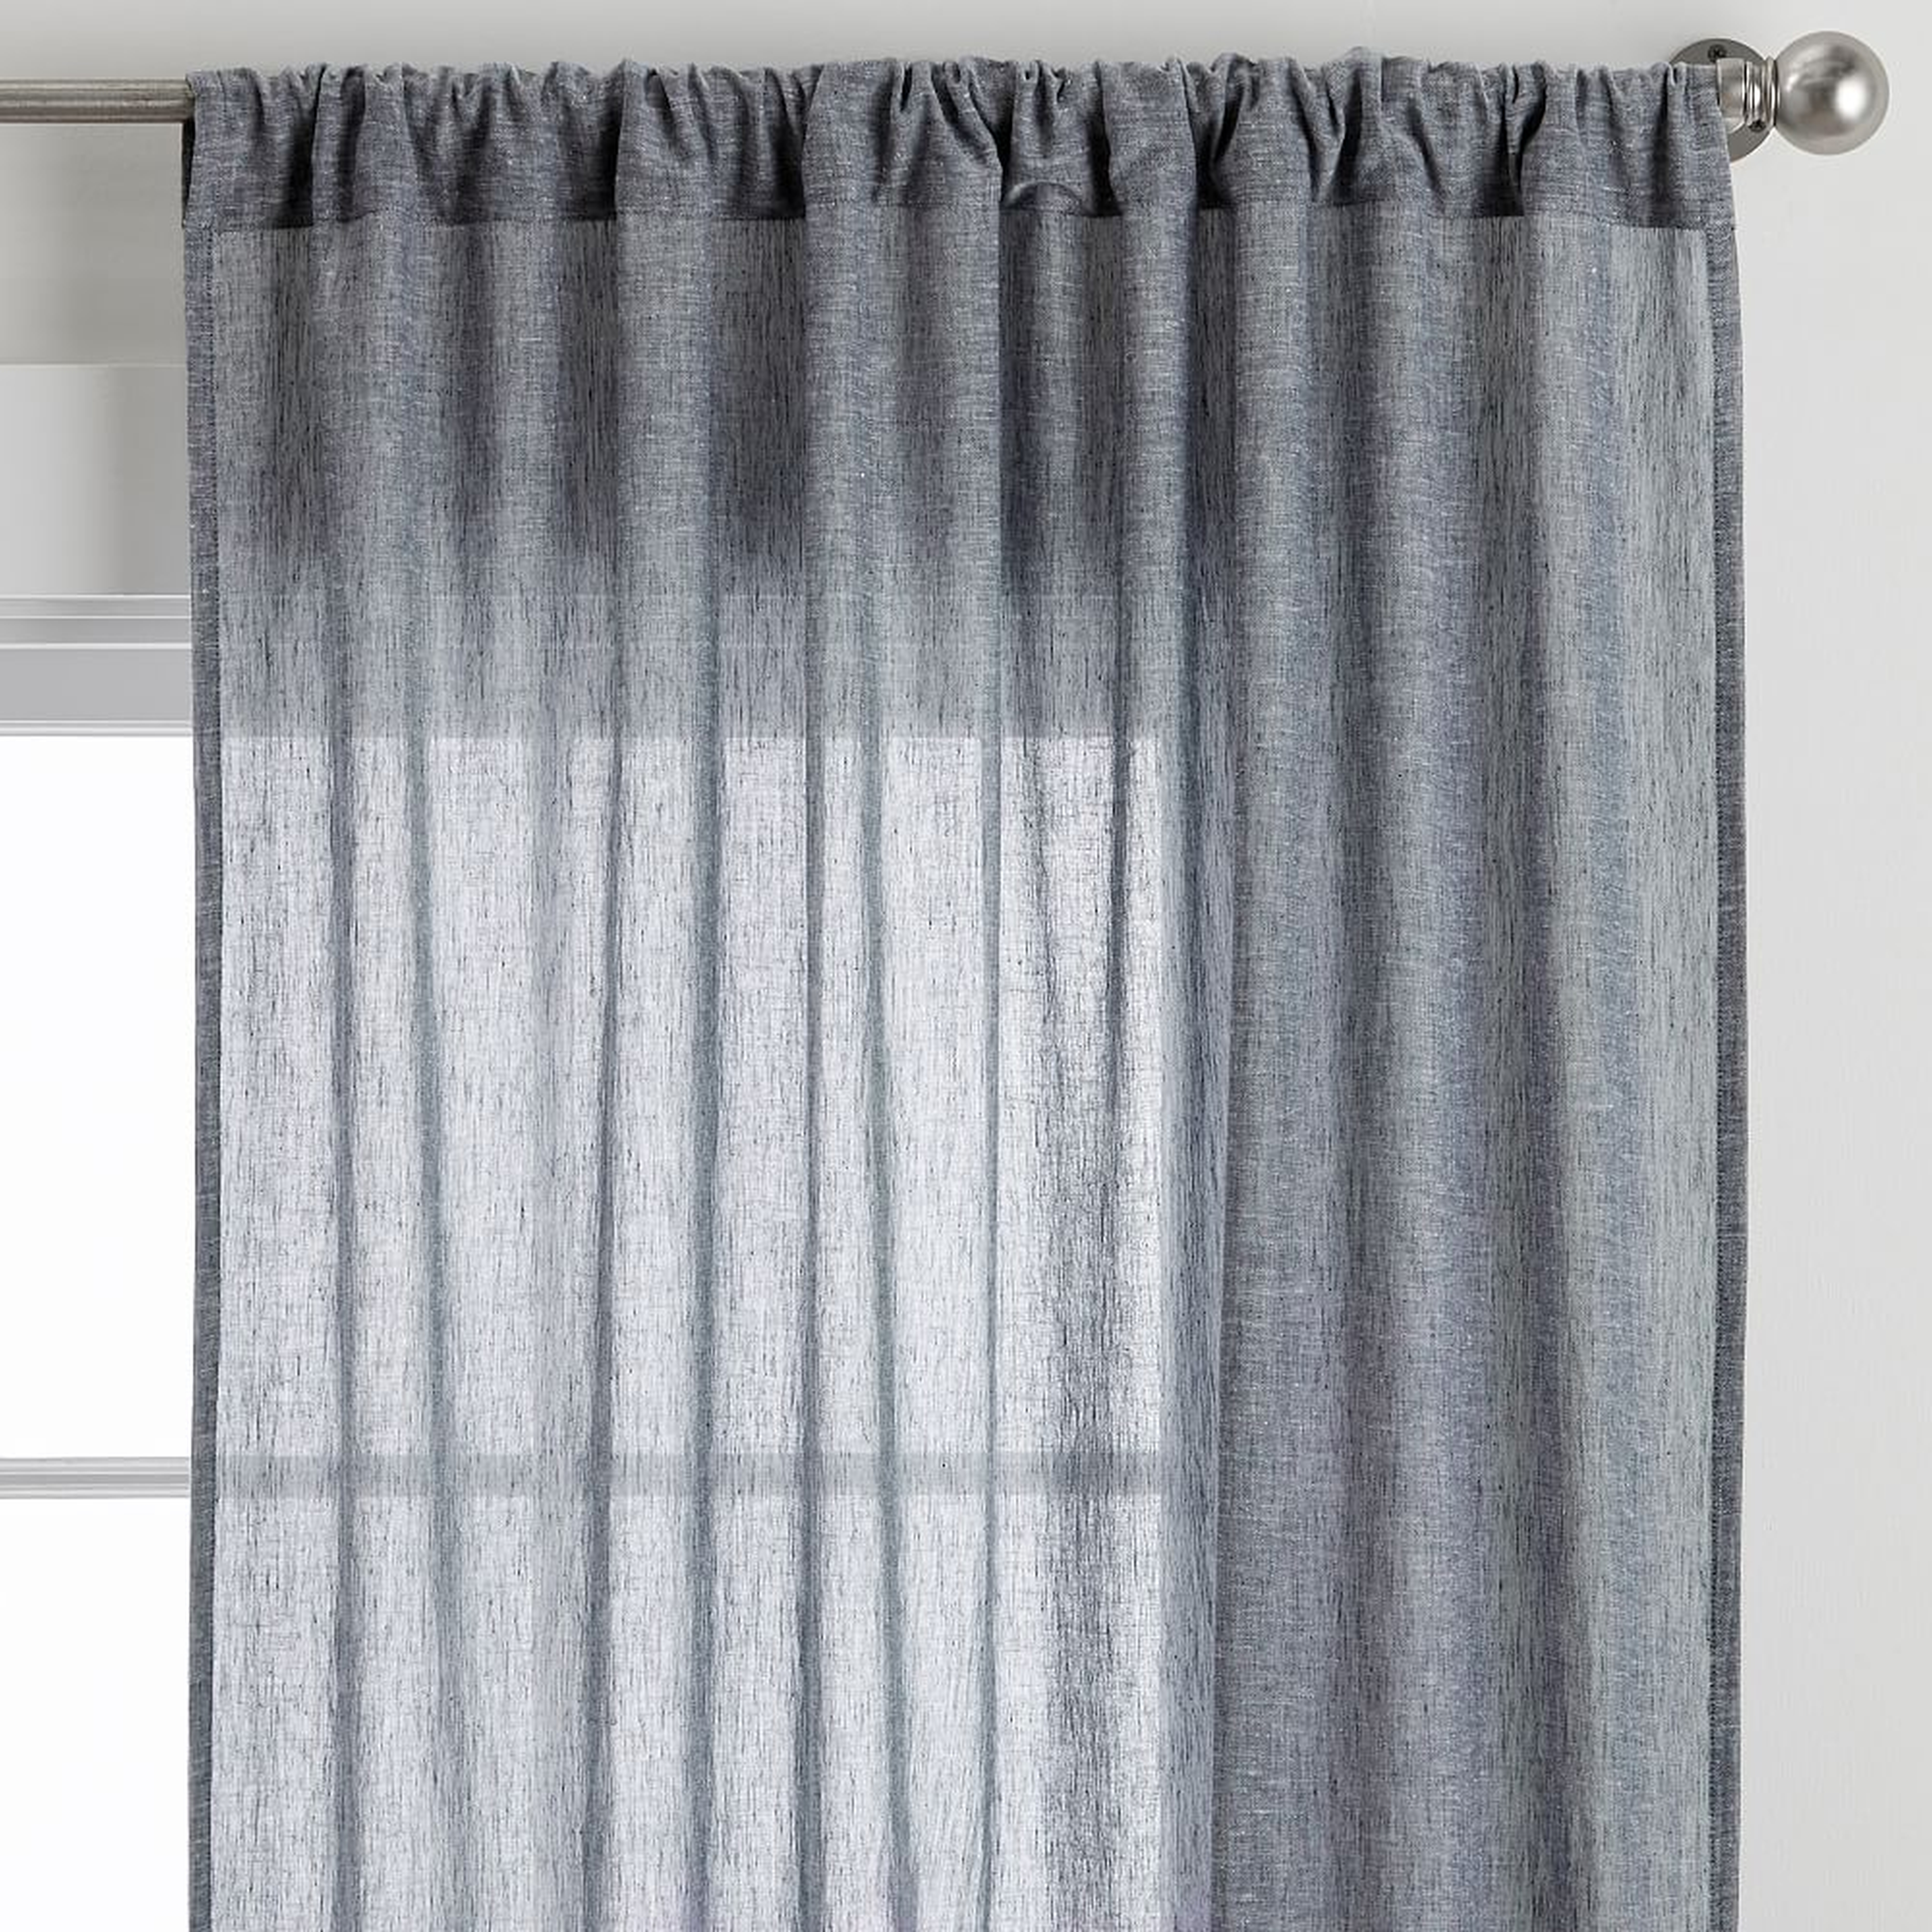 Cotton Linen Sheer Curtain, White/Navy, 44" x 96" - Pottery Barn Teen